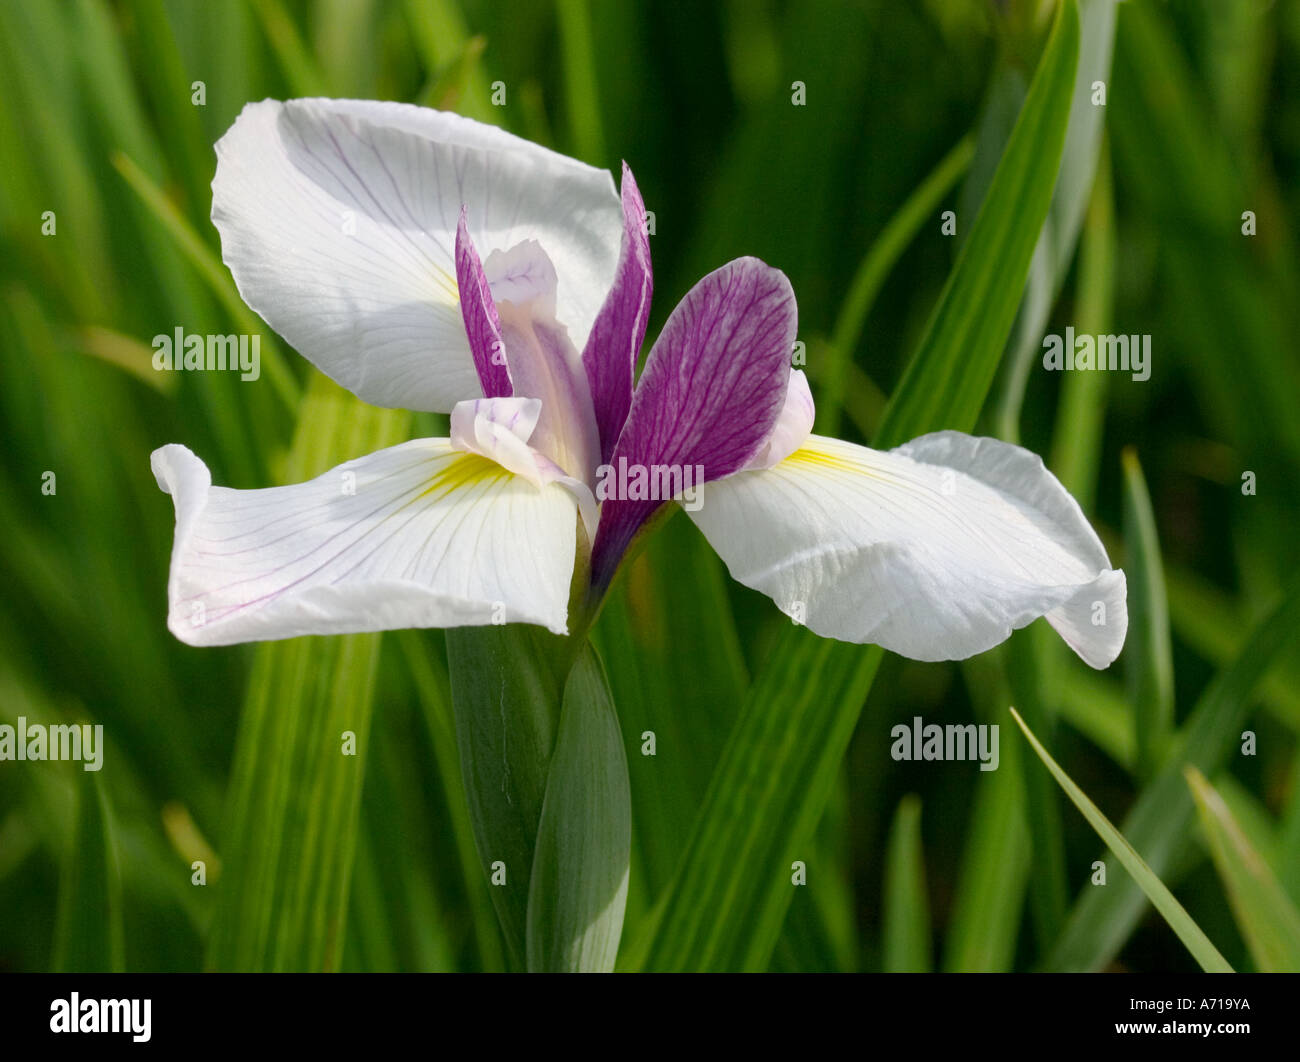 Close up shot of mauve and white Japanese water iris 'Iris ensata' in natural environment Stock Photo